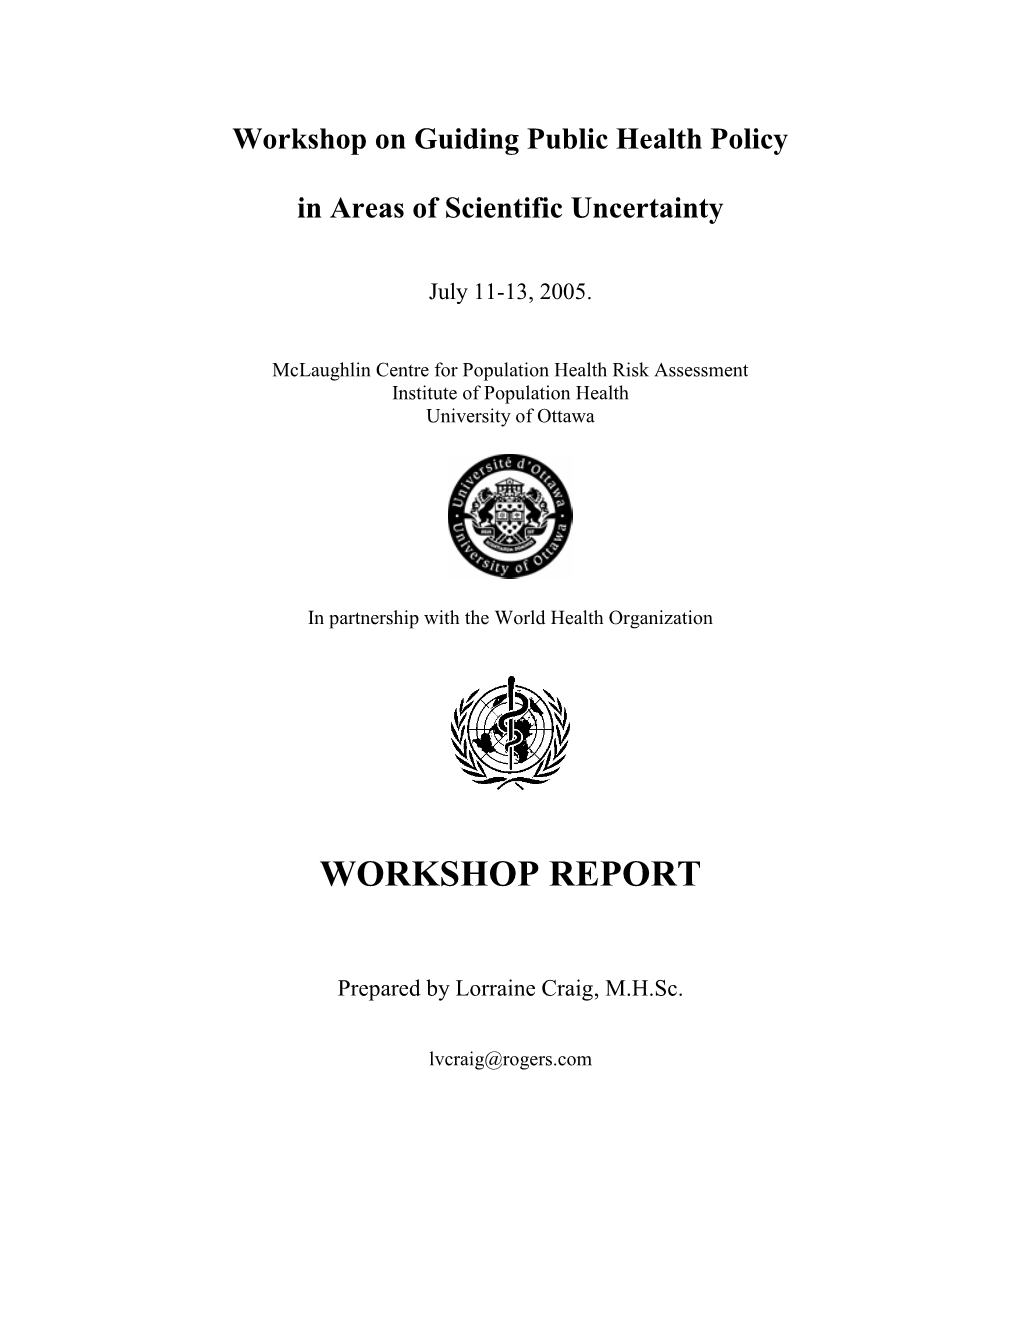 Workshop Report